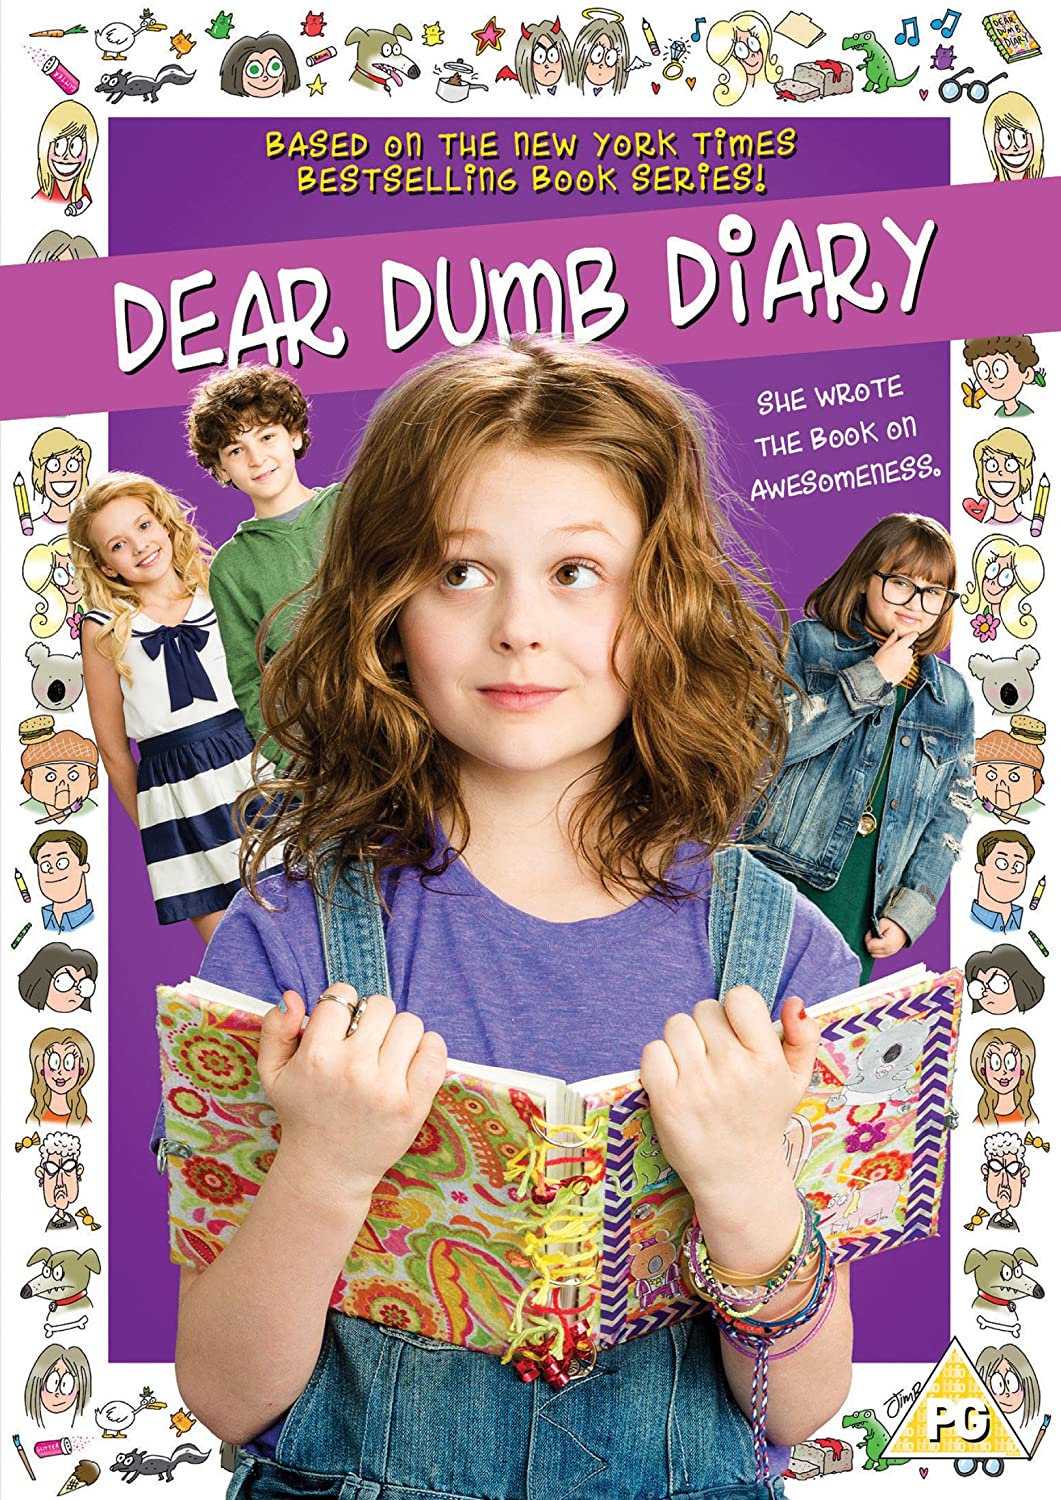 Dear Dumb Diary - Children's literature [DVD]